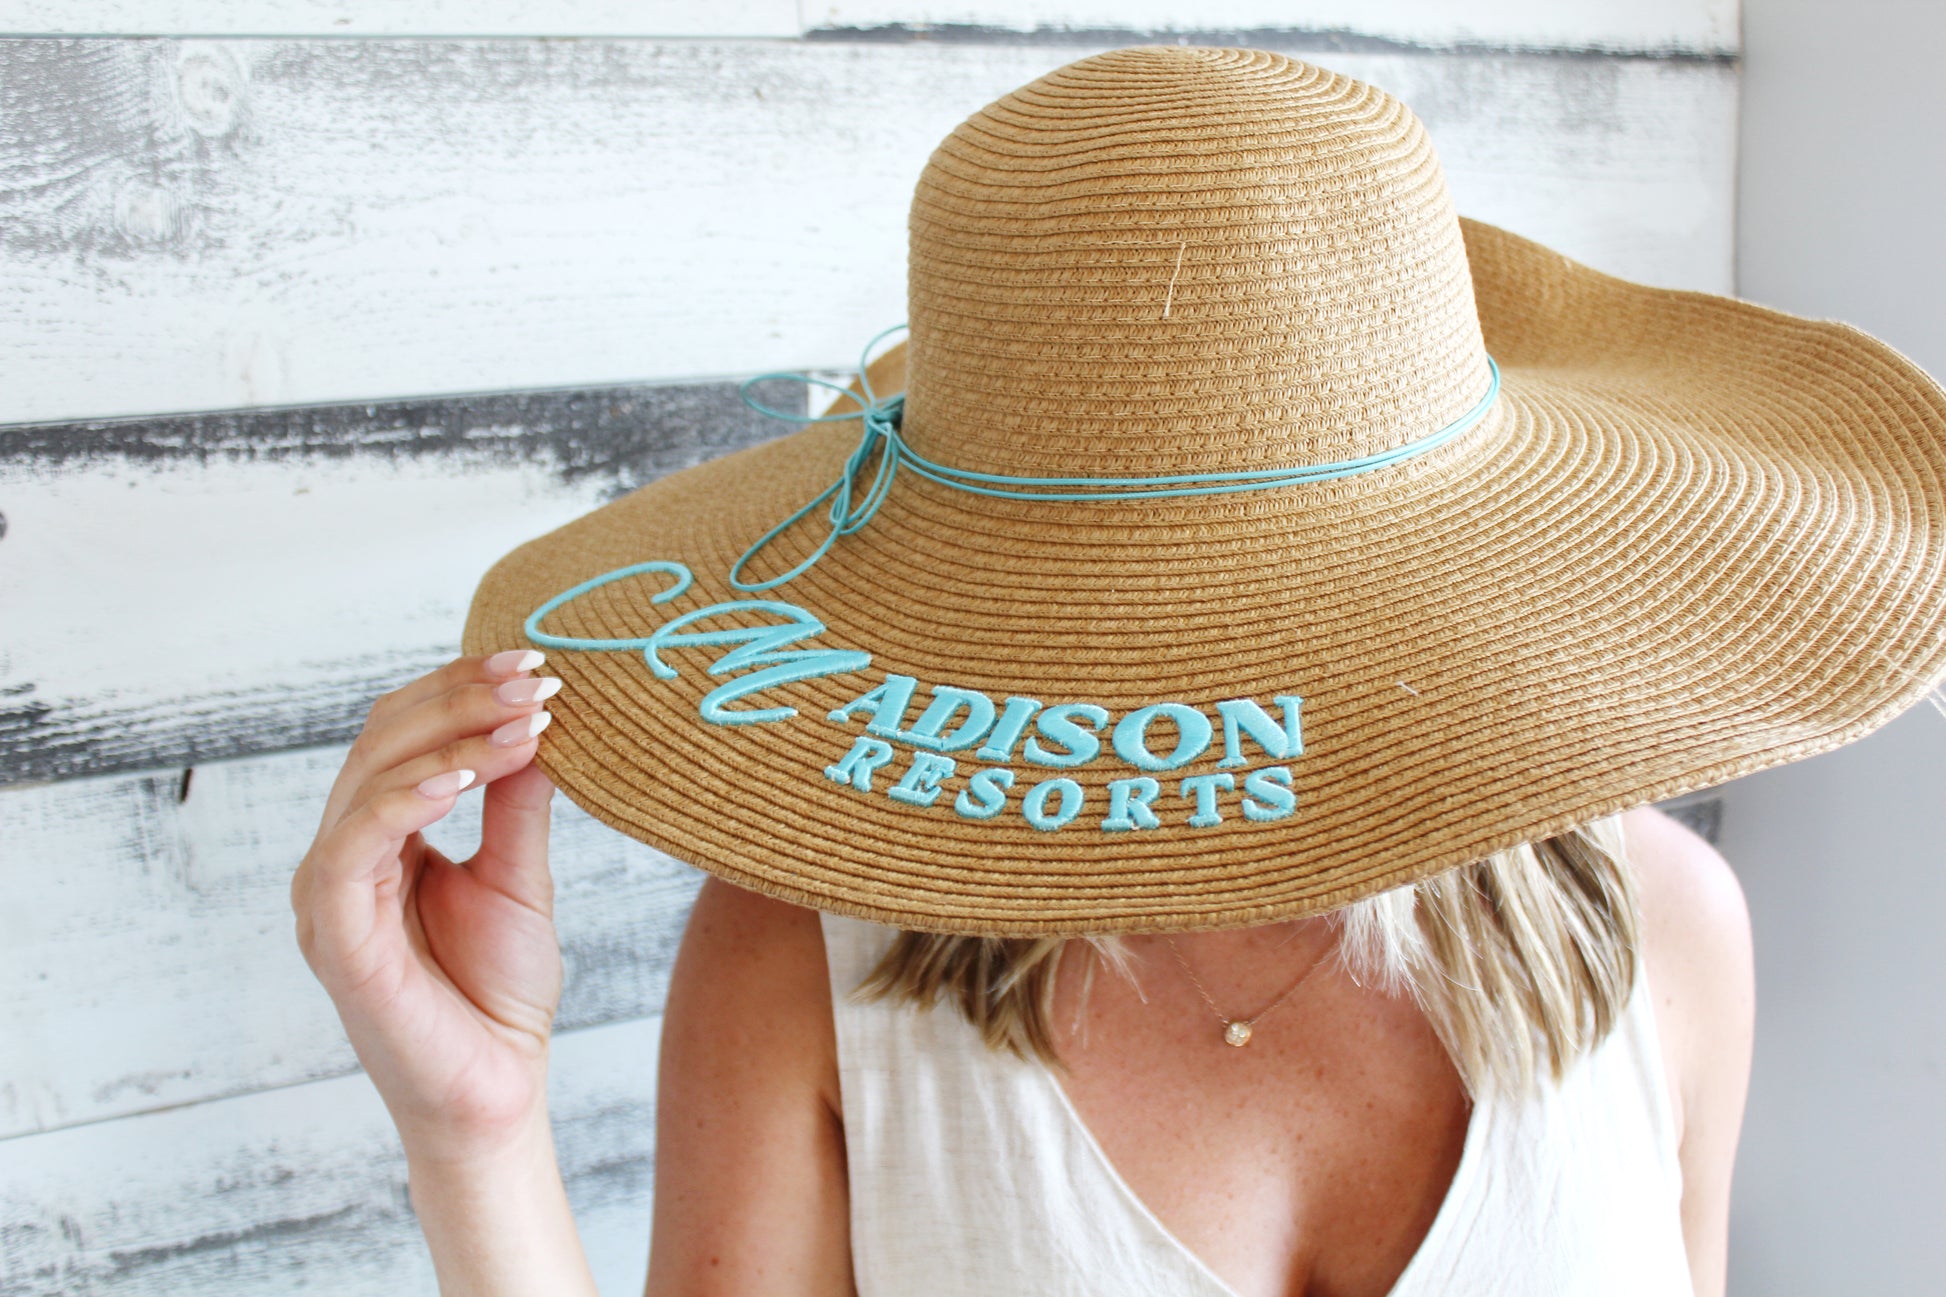 Women's Hats & Caps, Sun Hats, Beach Hats, Resort Hats